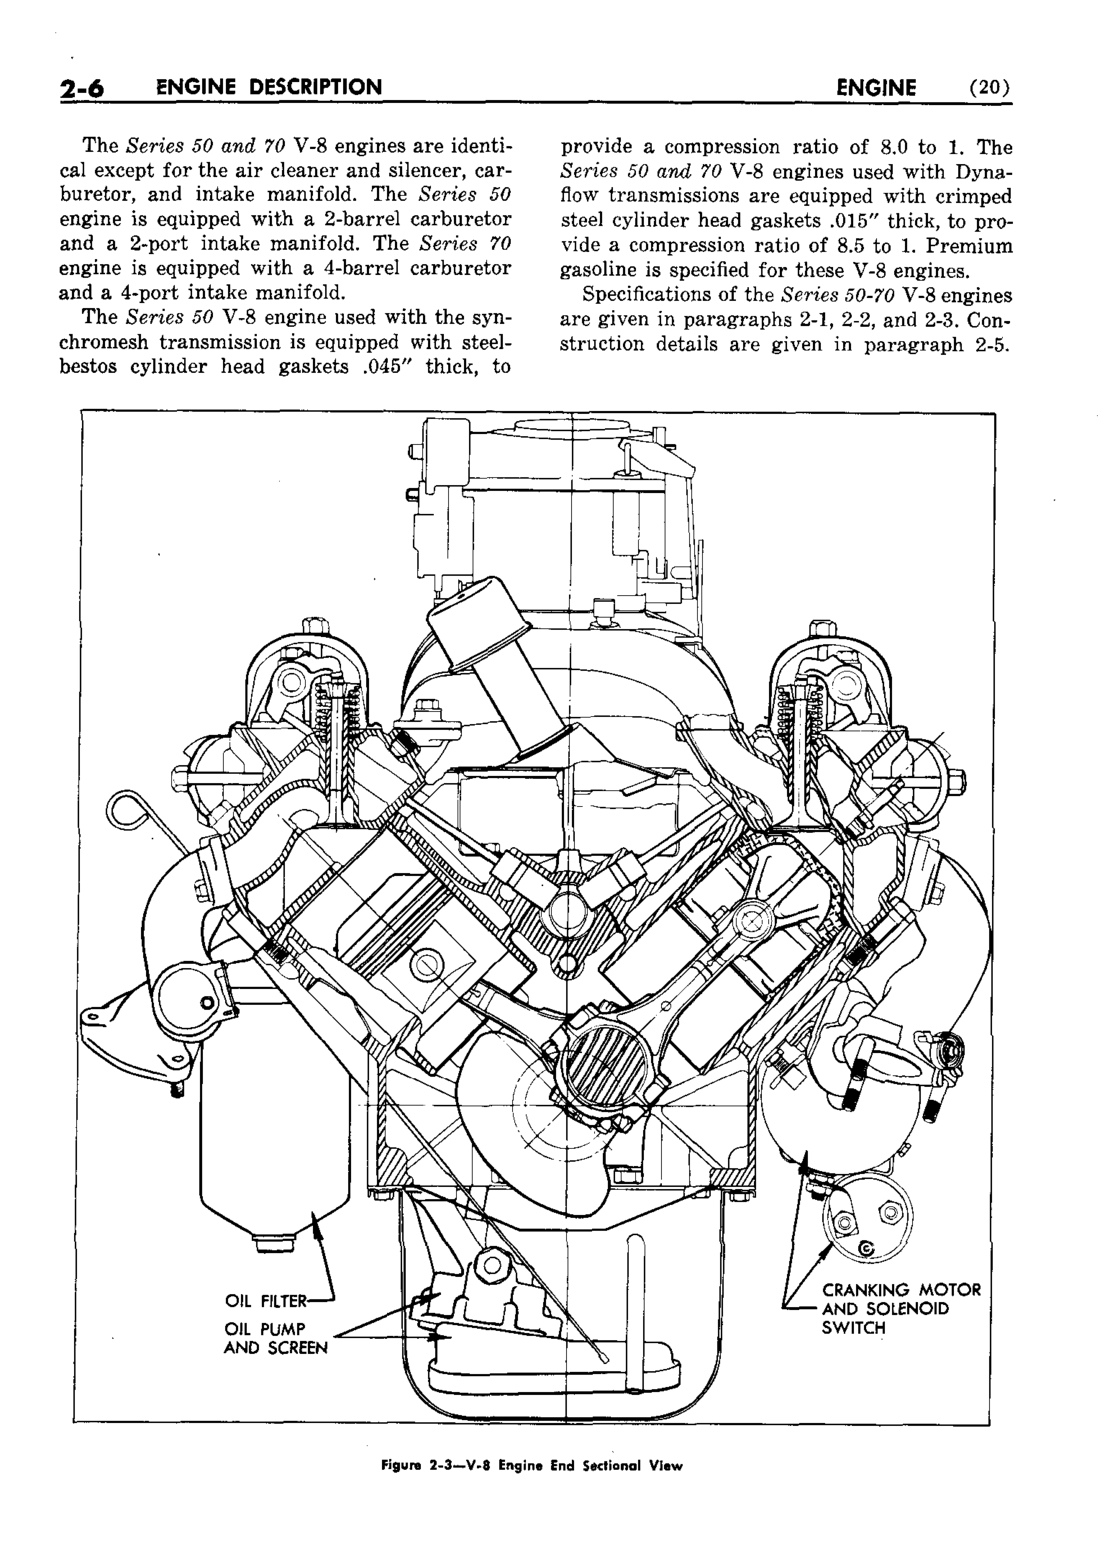 n_03 1953 Buick Shop Manual - Engine-006-006.jpg